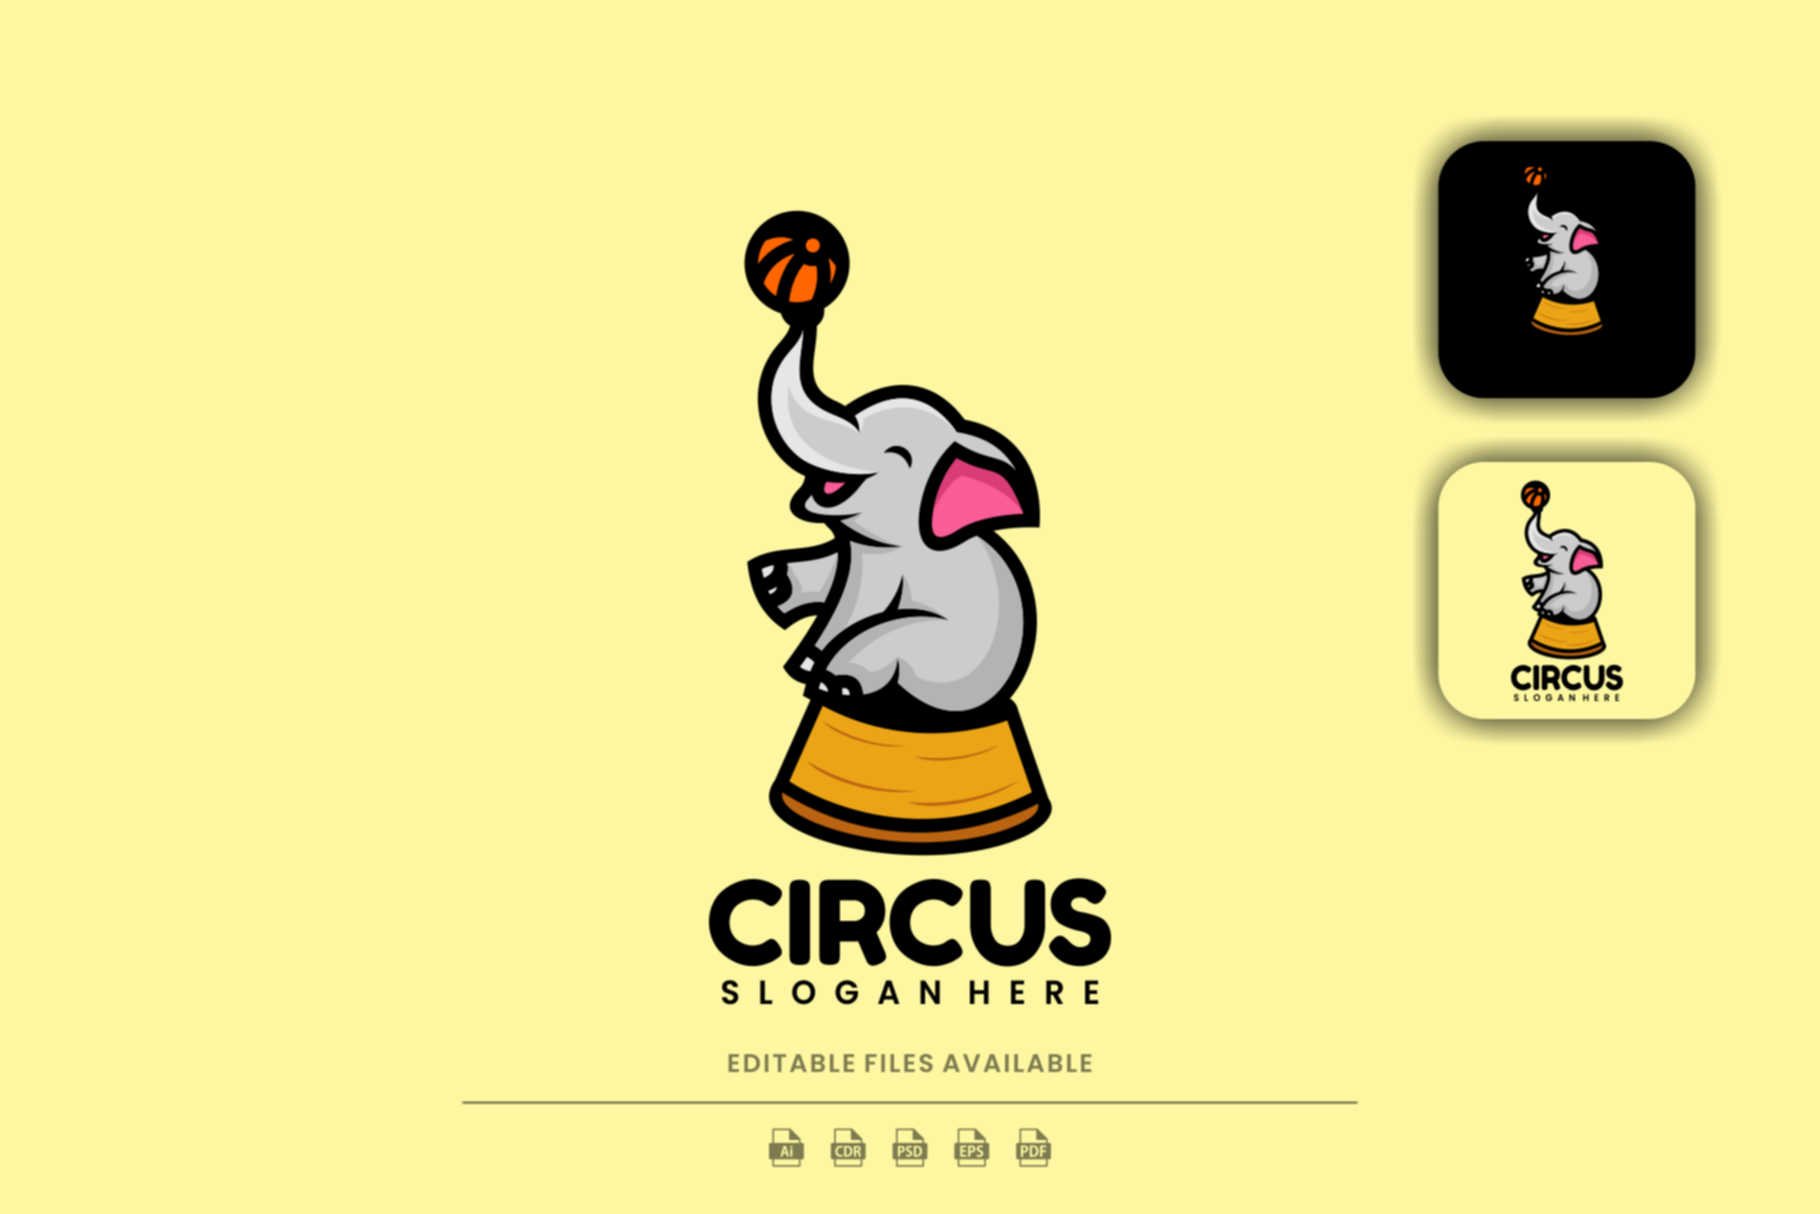 Circus Cartoon Logo cover image.